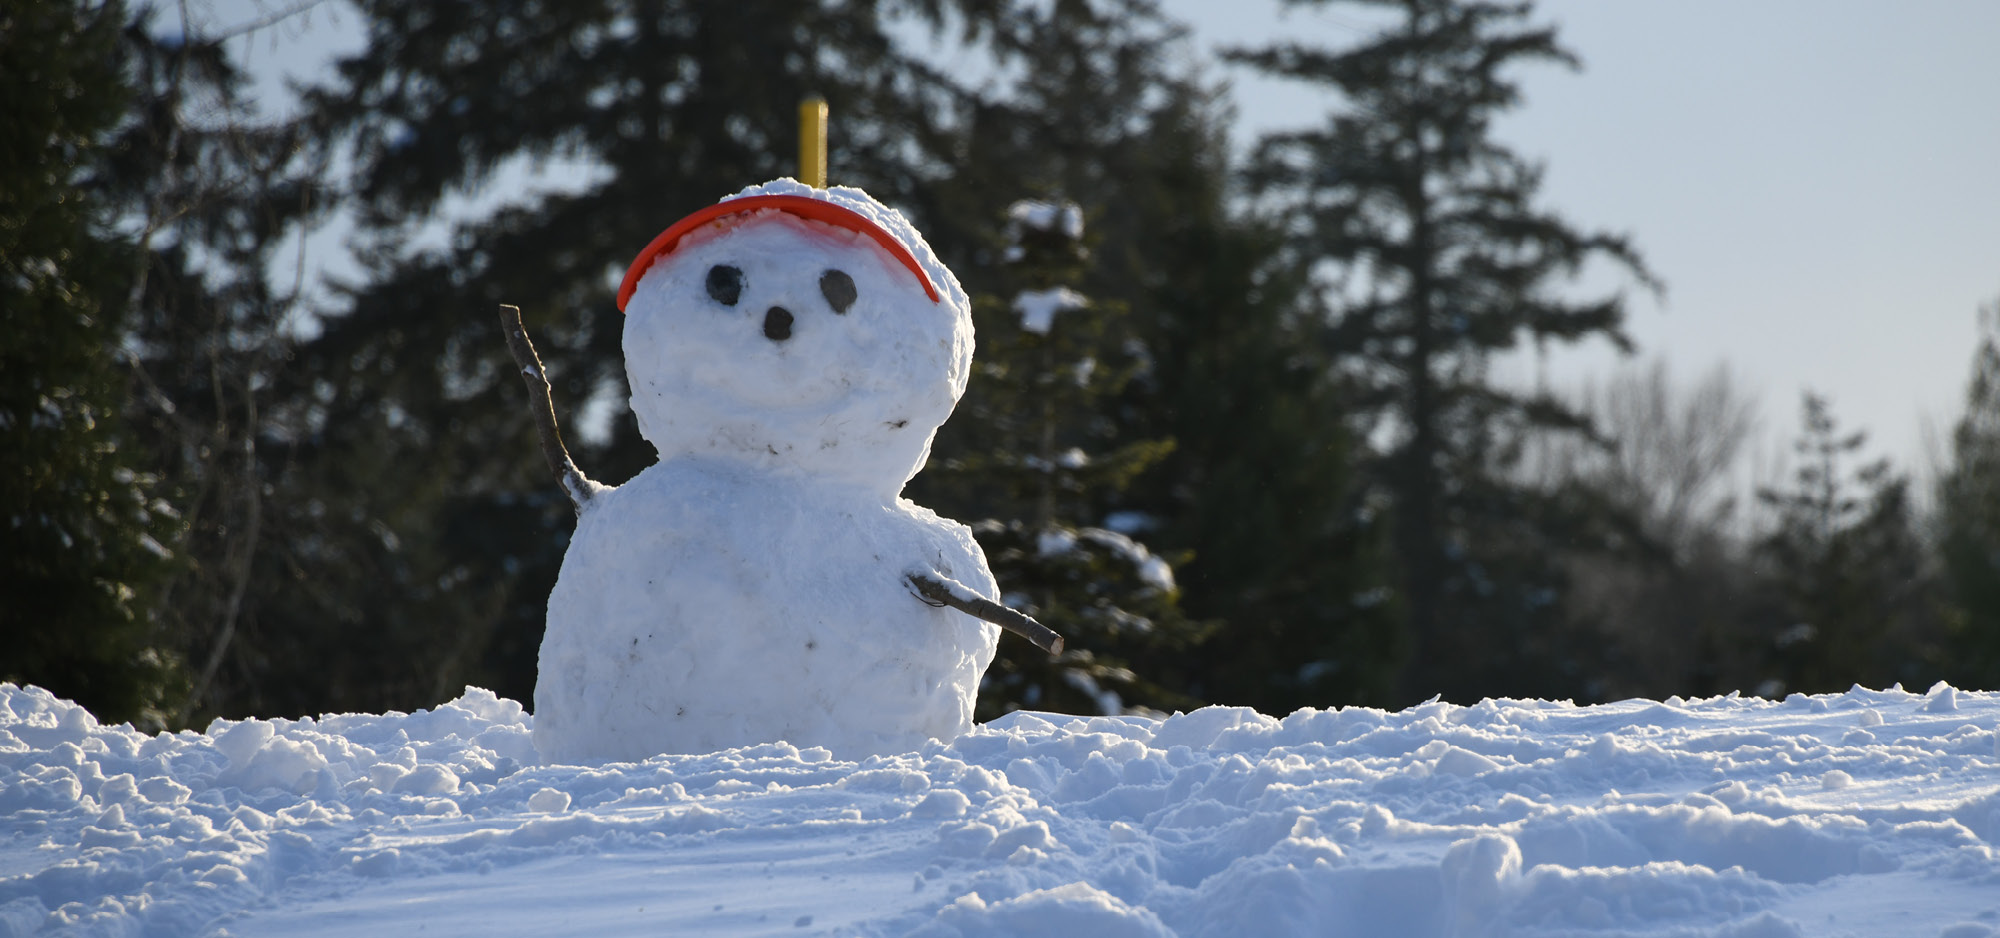 snowman on a hill